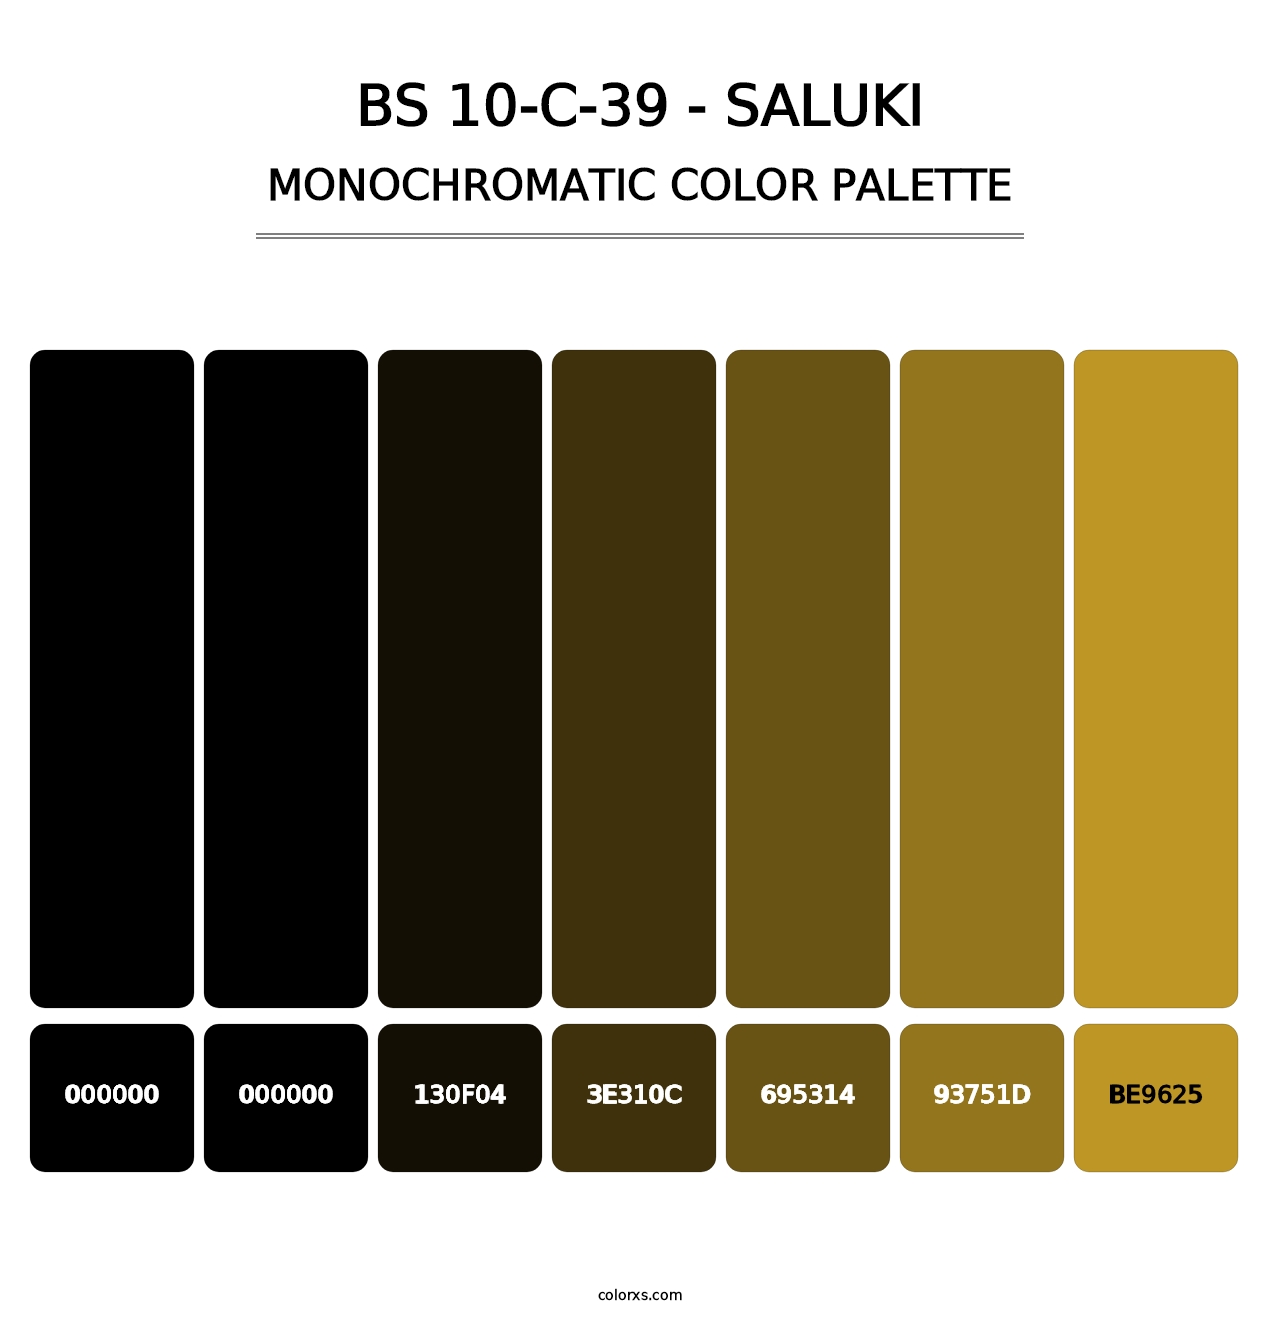 BS 10-C-39 - Saluki - Monochromatic Color Palette